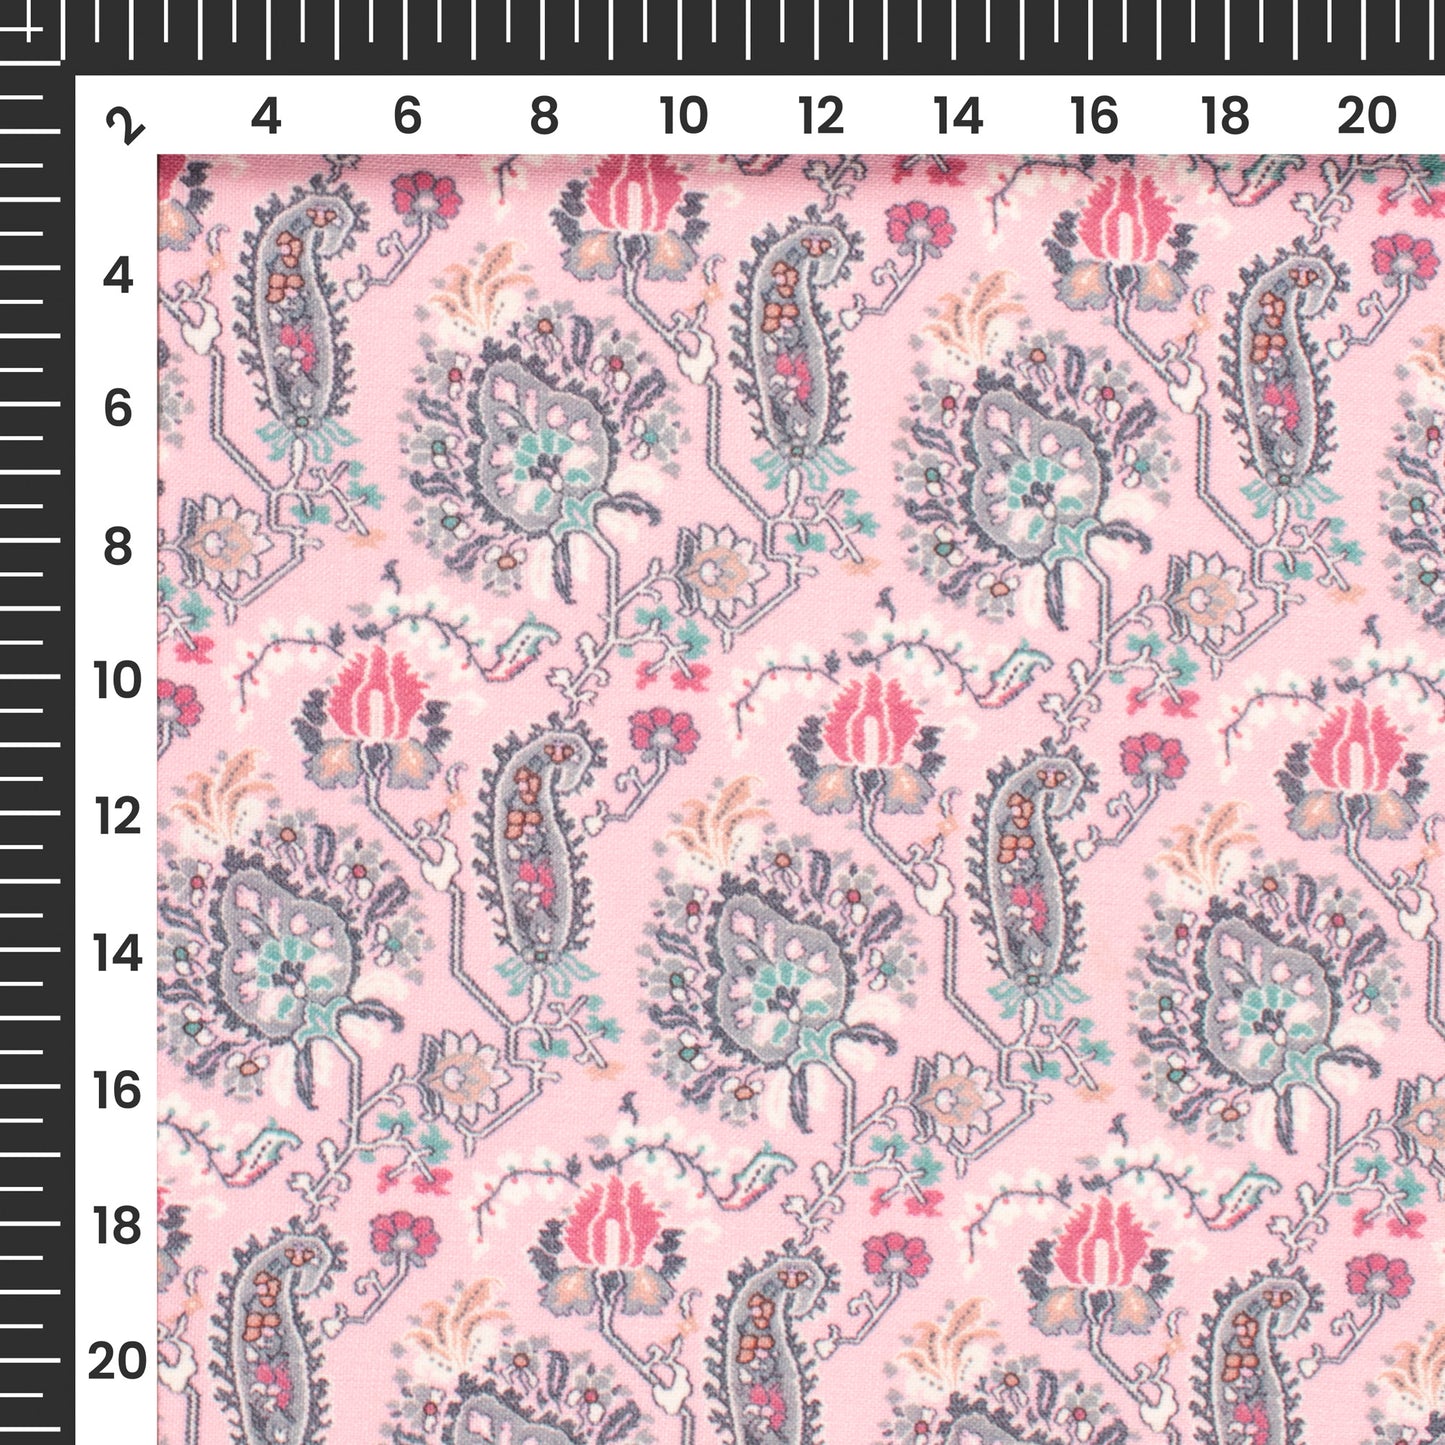 Bubblegum Pink Ethnic Digital Print Linen Textured Fabric (Width 56 Inches)